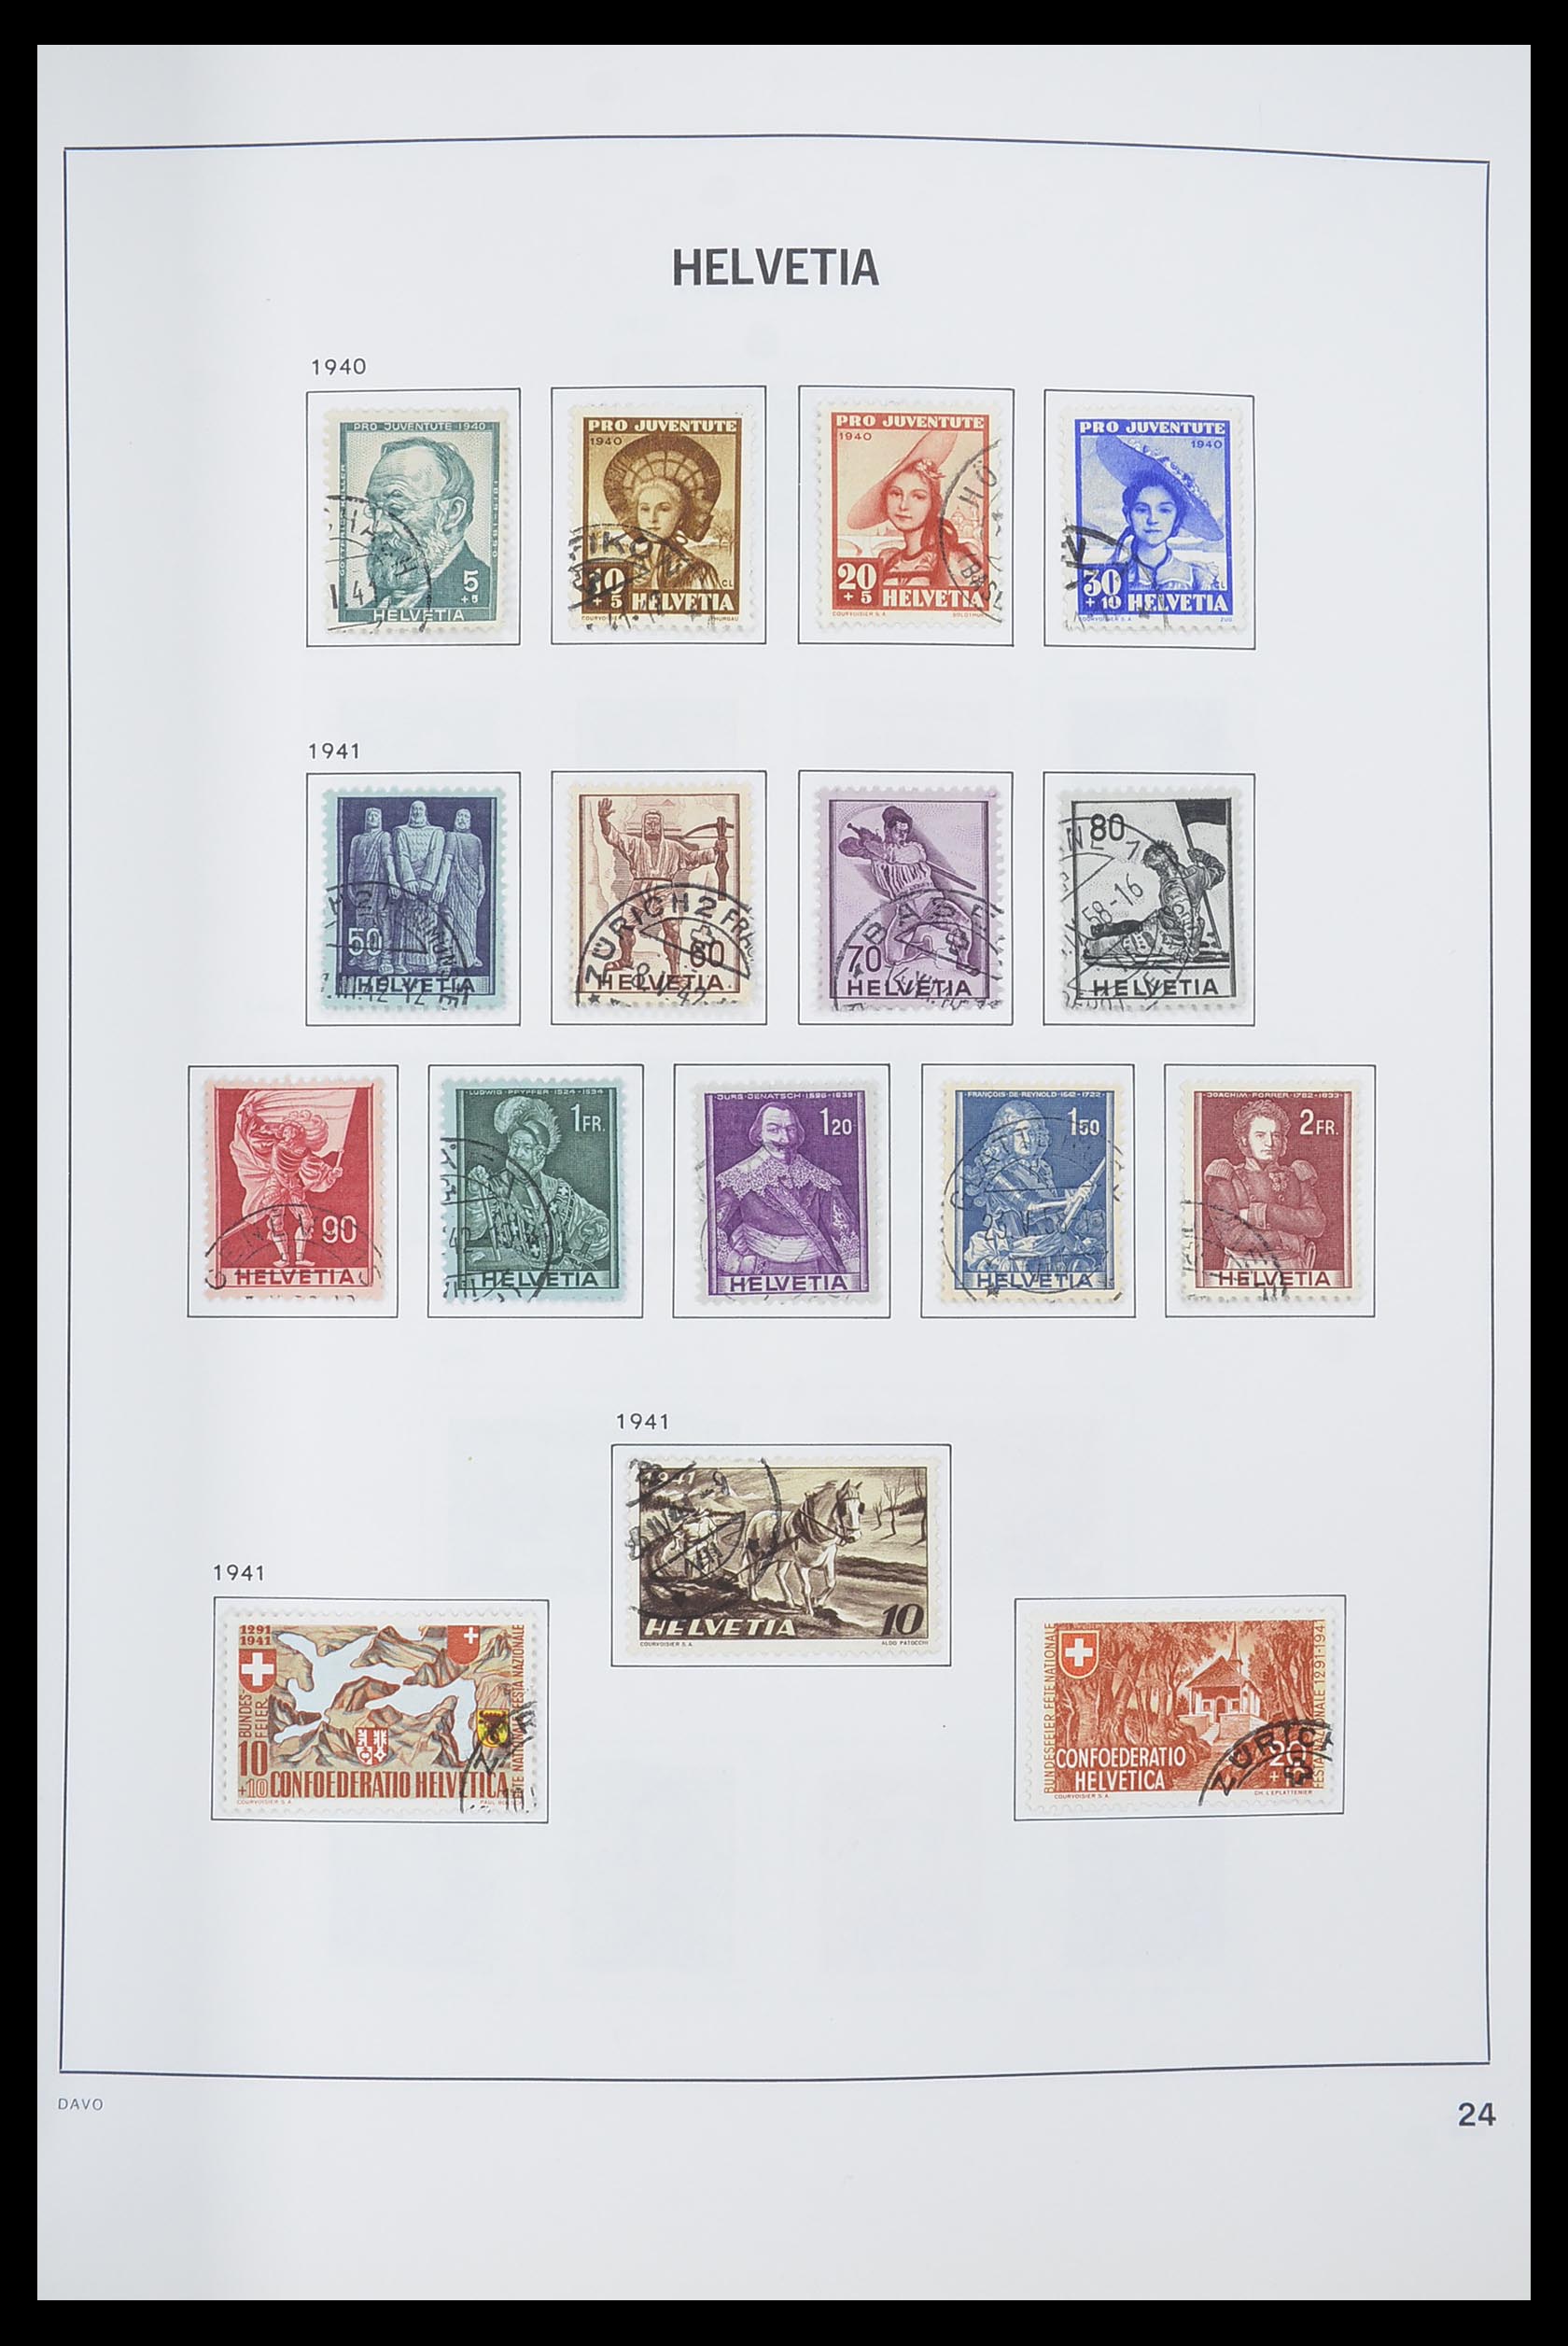 33559 025 - Stamp collection 33559 Switzerland 1850-2000.